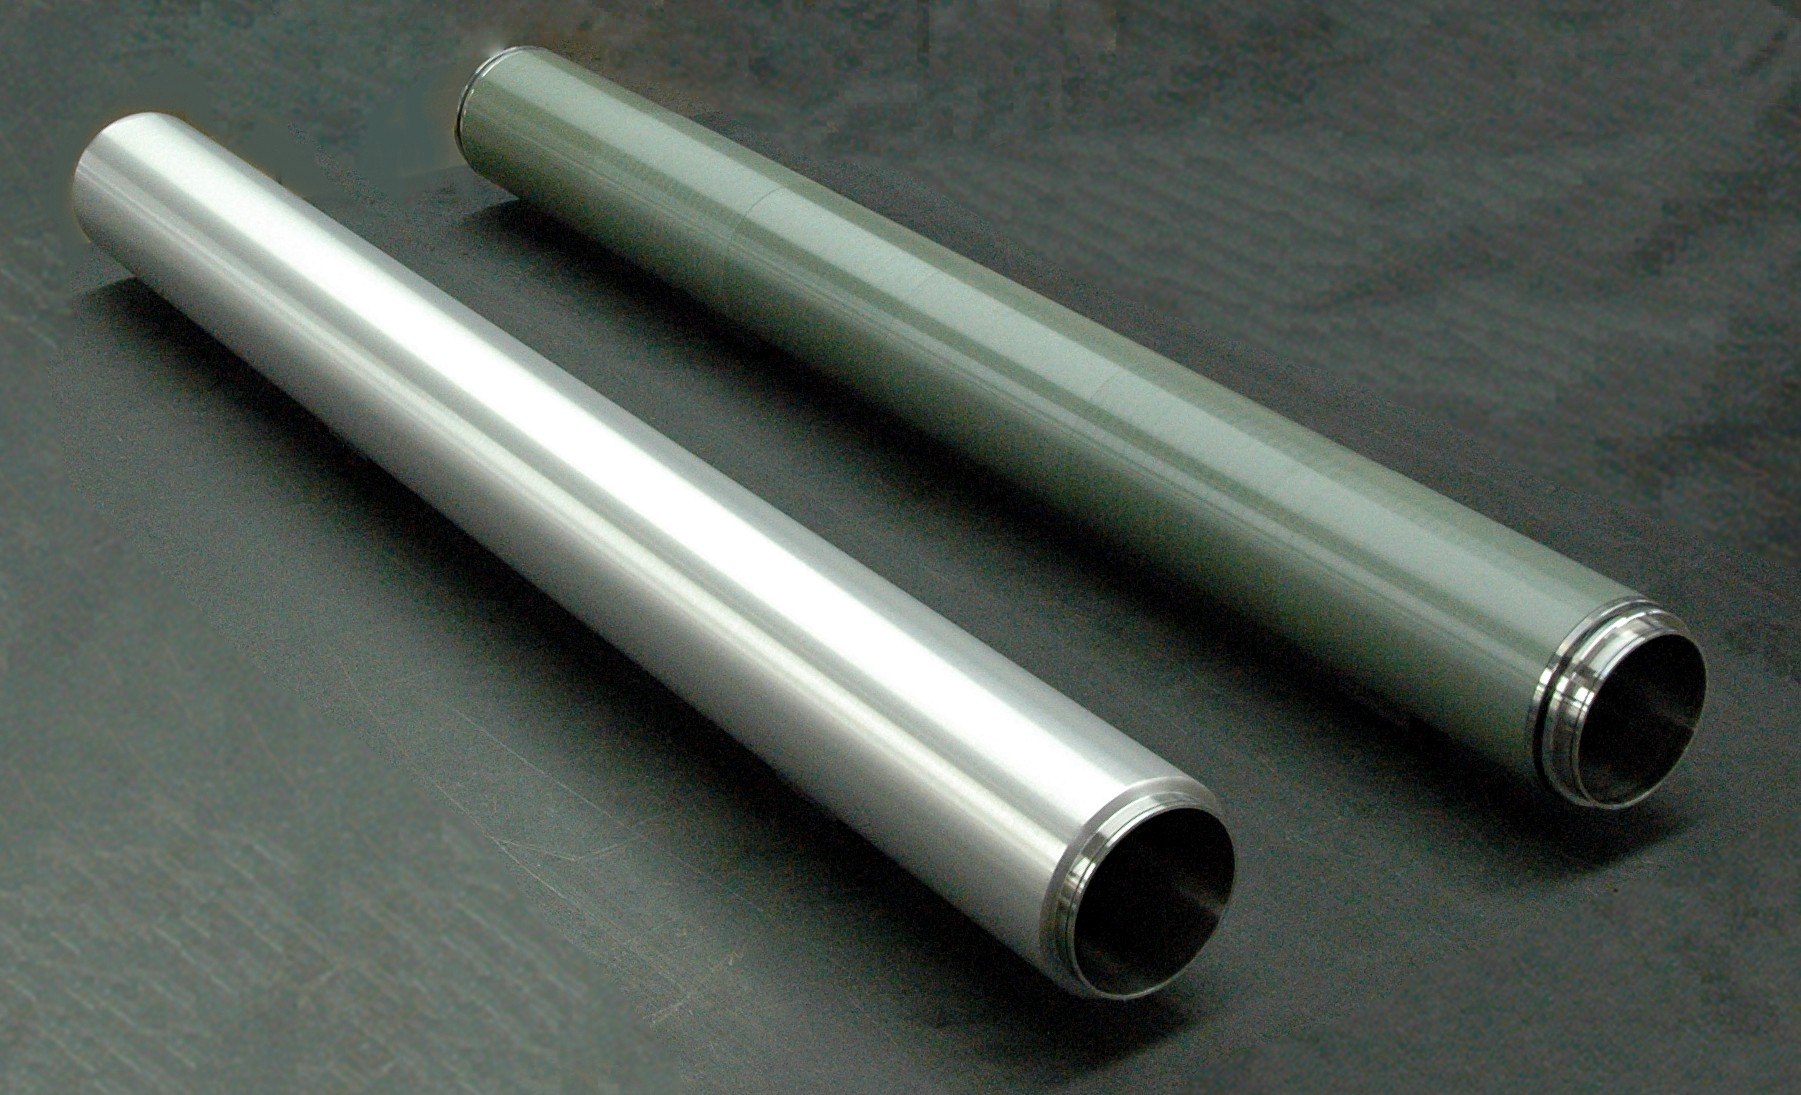 Aluminum and Indium Tin Oxide Cylindrical Targets